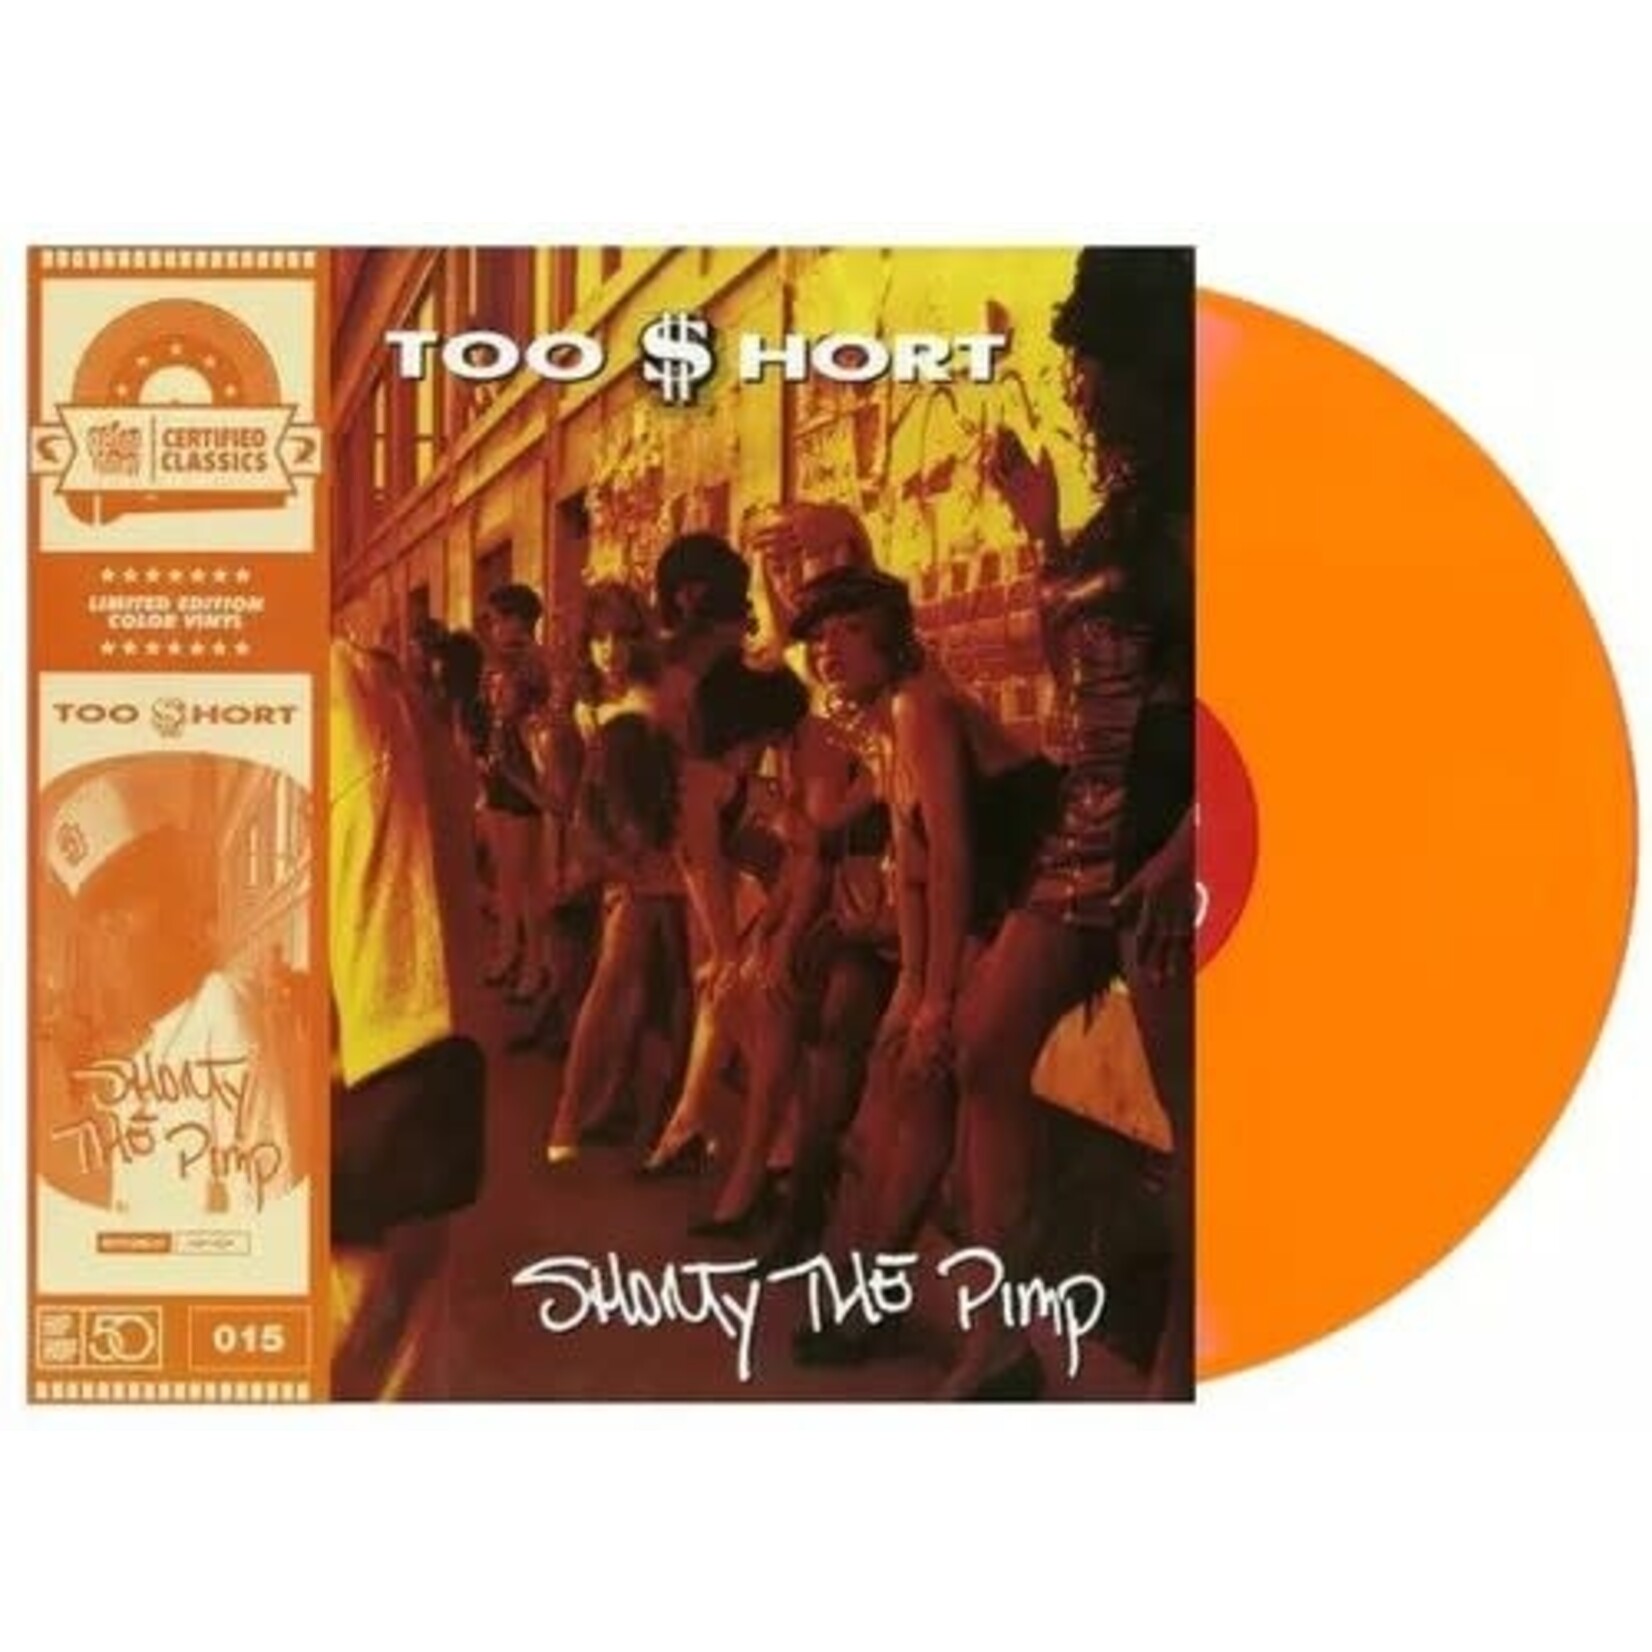 Too Short - Shorty The Pimp (Orange Vinyl) [LP]